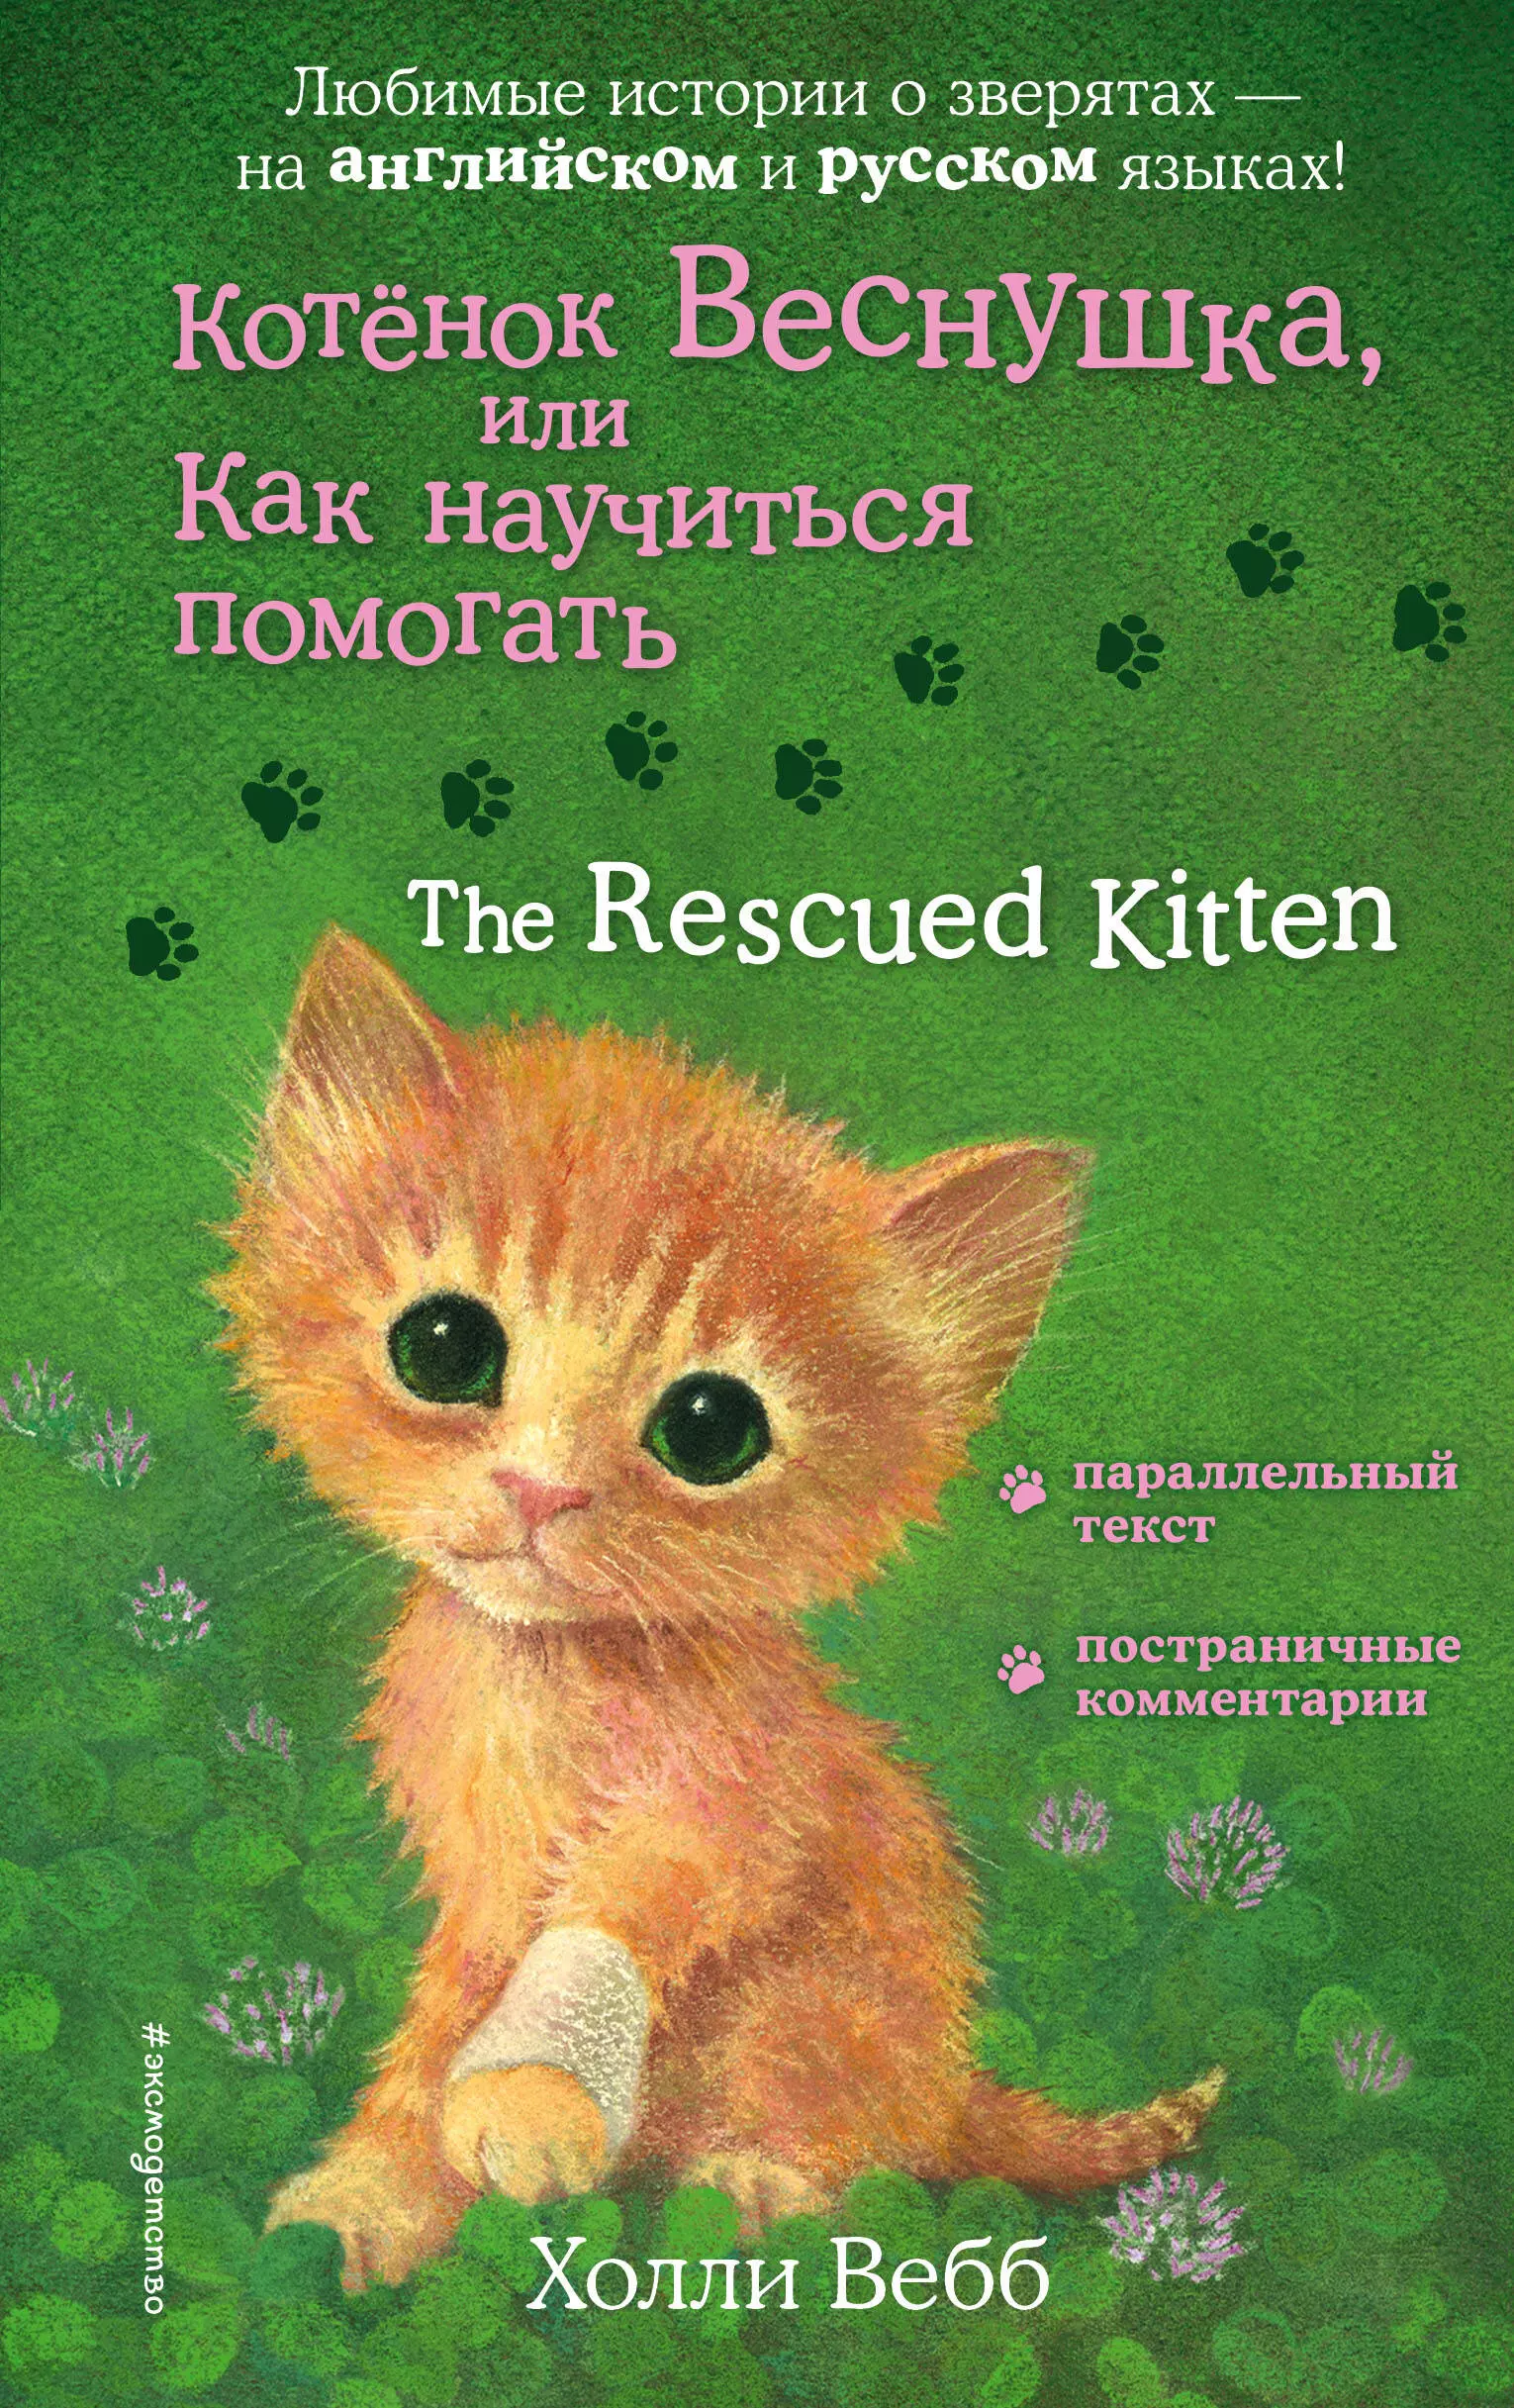 Котенок Веснушка, или Как научиться помогать = The Rescued Kitten вебб холли котенок веснушка или как научиться помогать the rescued kitten